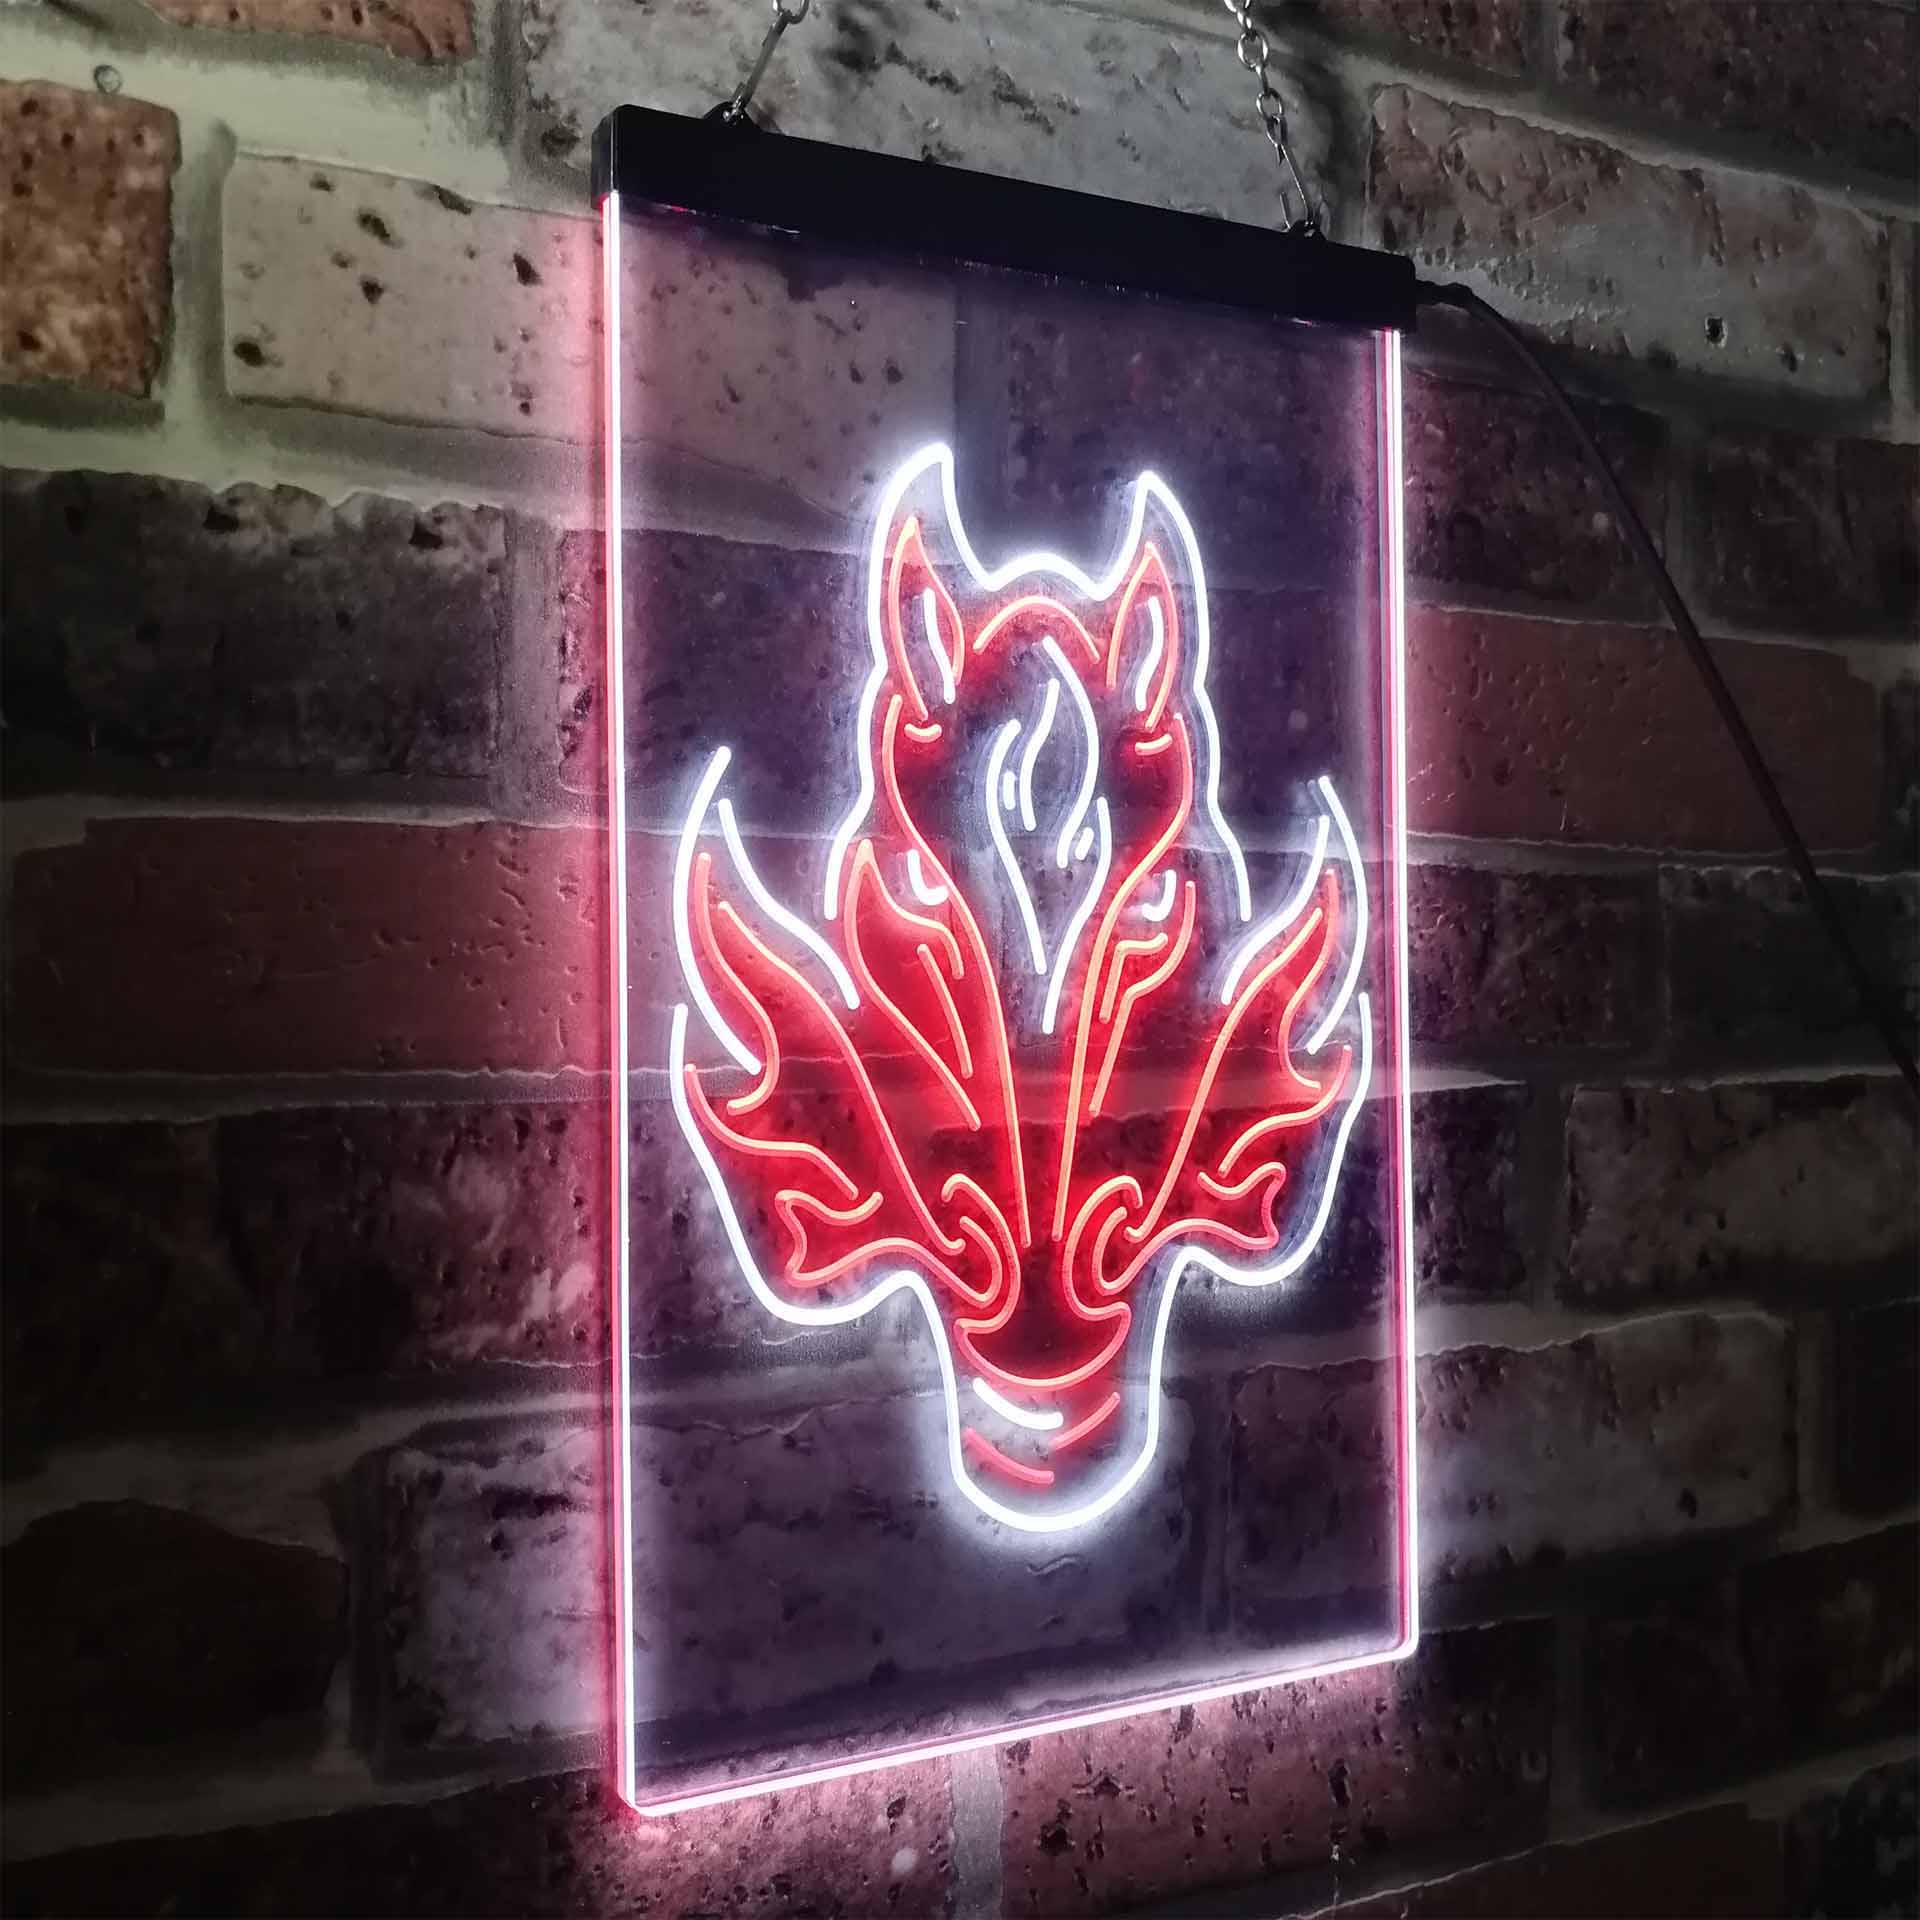 Calgary Flames LED Neon Sign